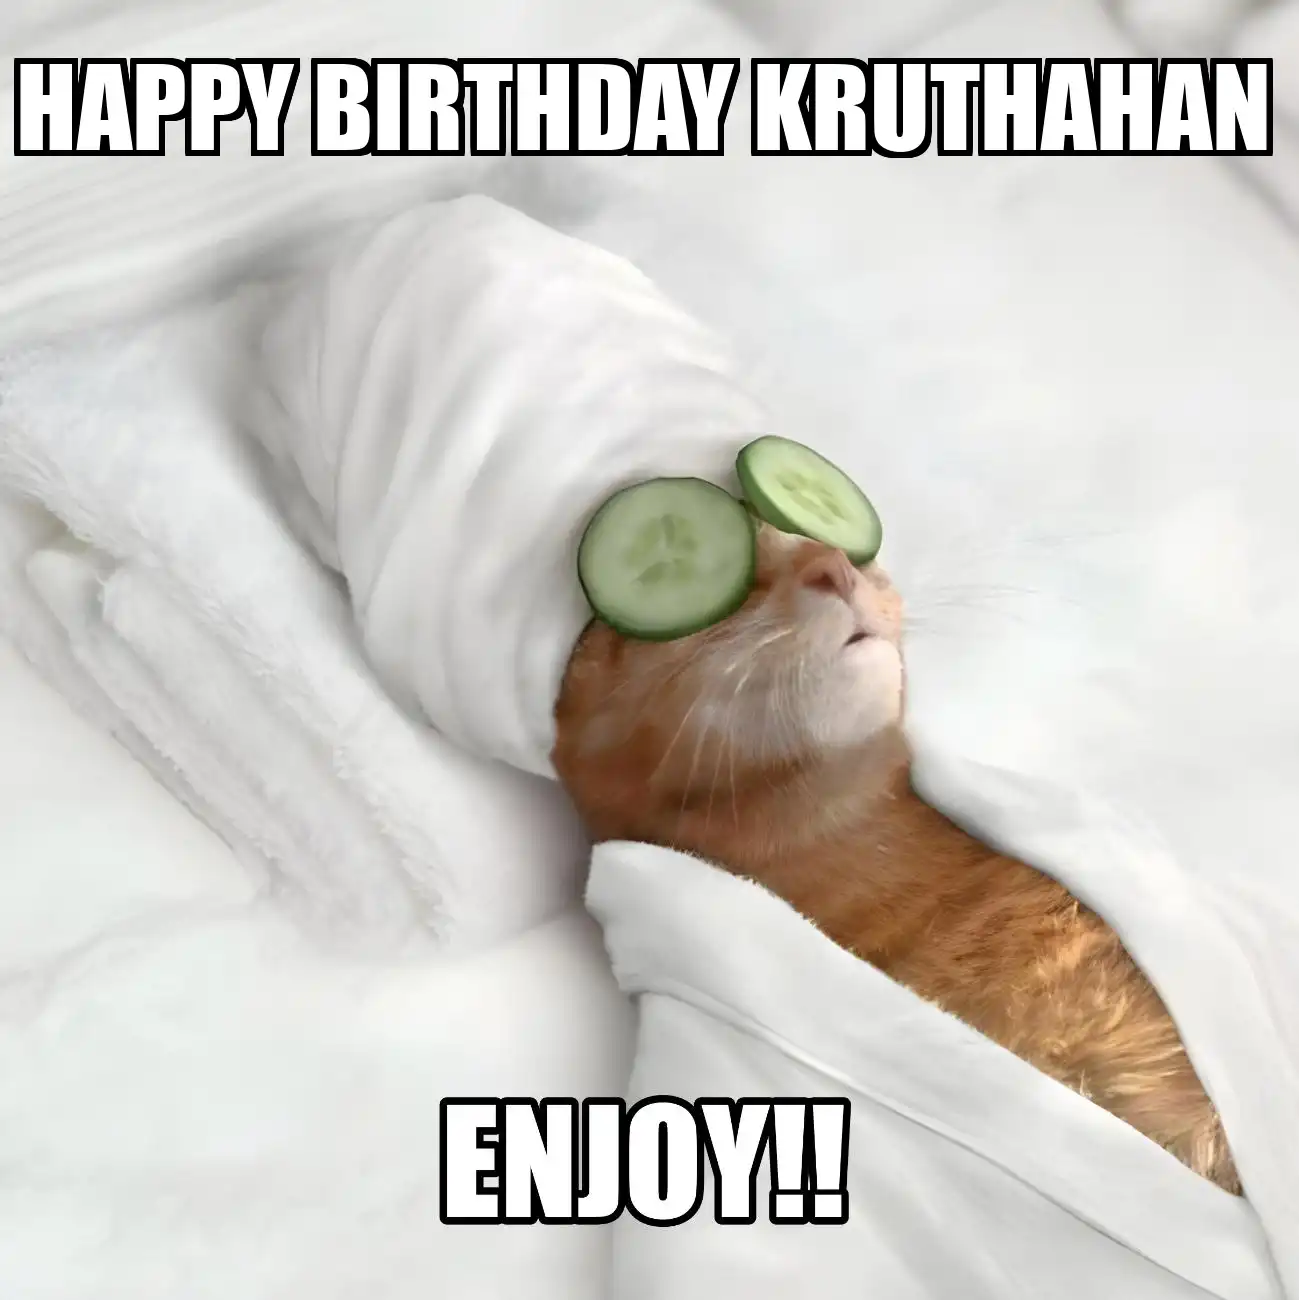 Happy Birthday Kruthahan Enjoy Cat Meme